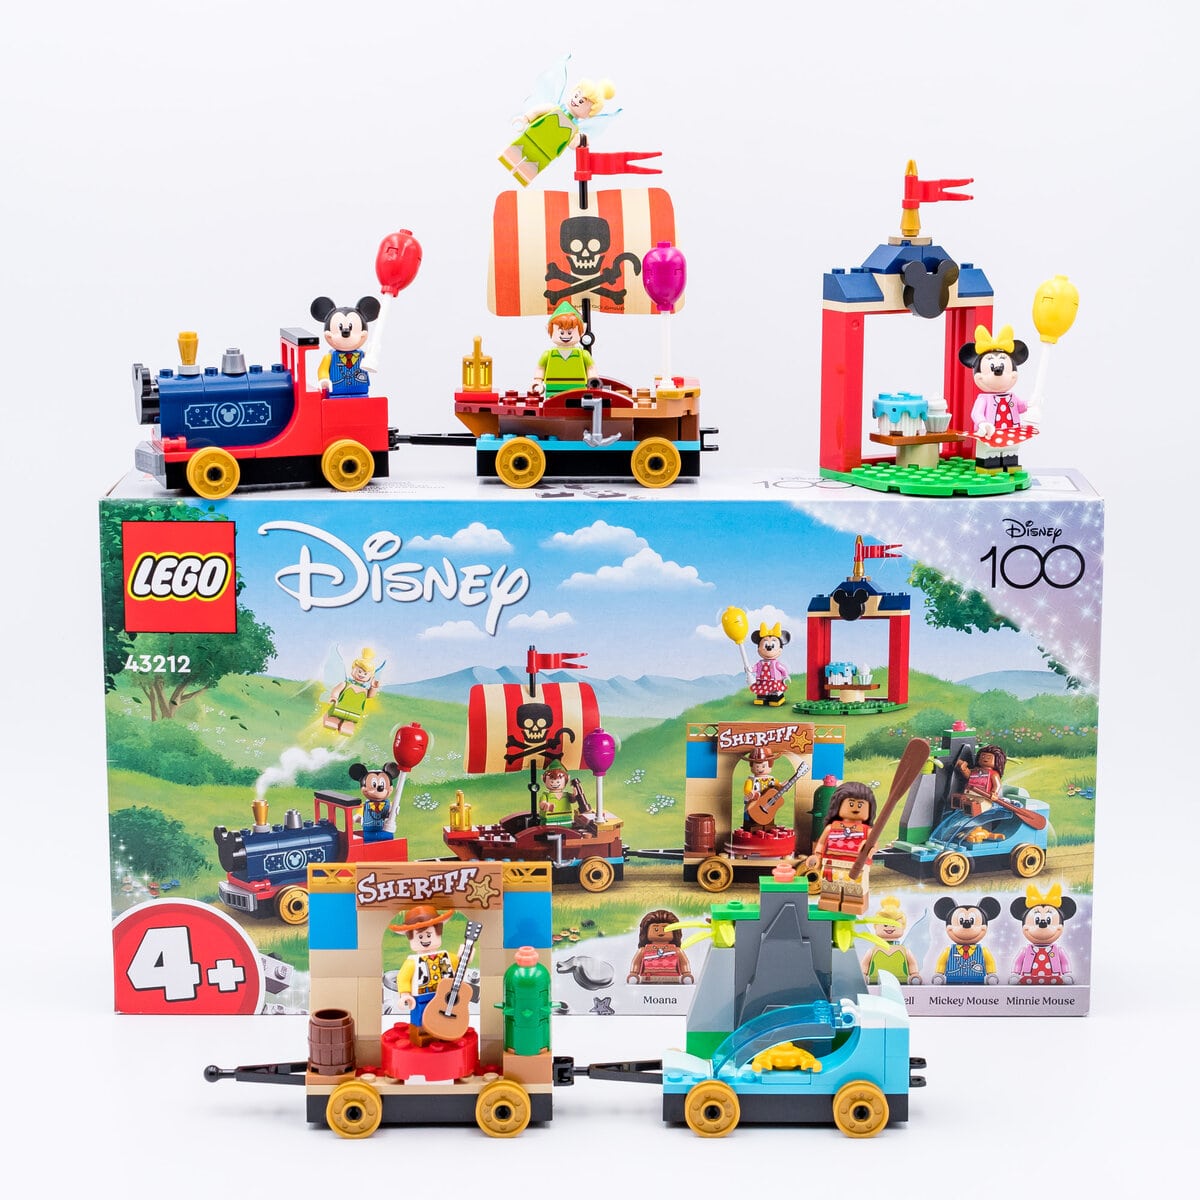 Review LEGO 43212 Disney Celebration Train - HelloBricks